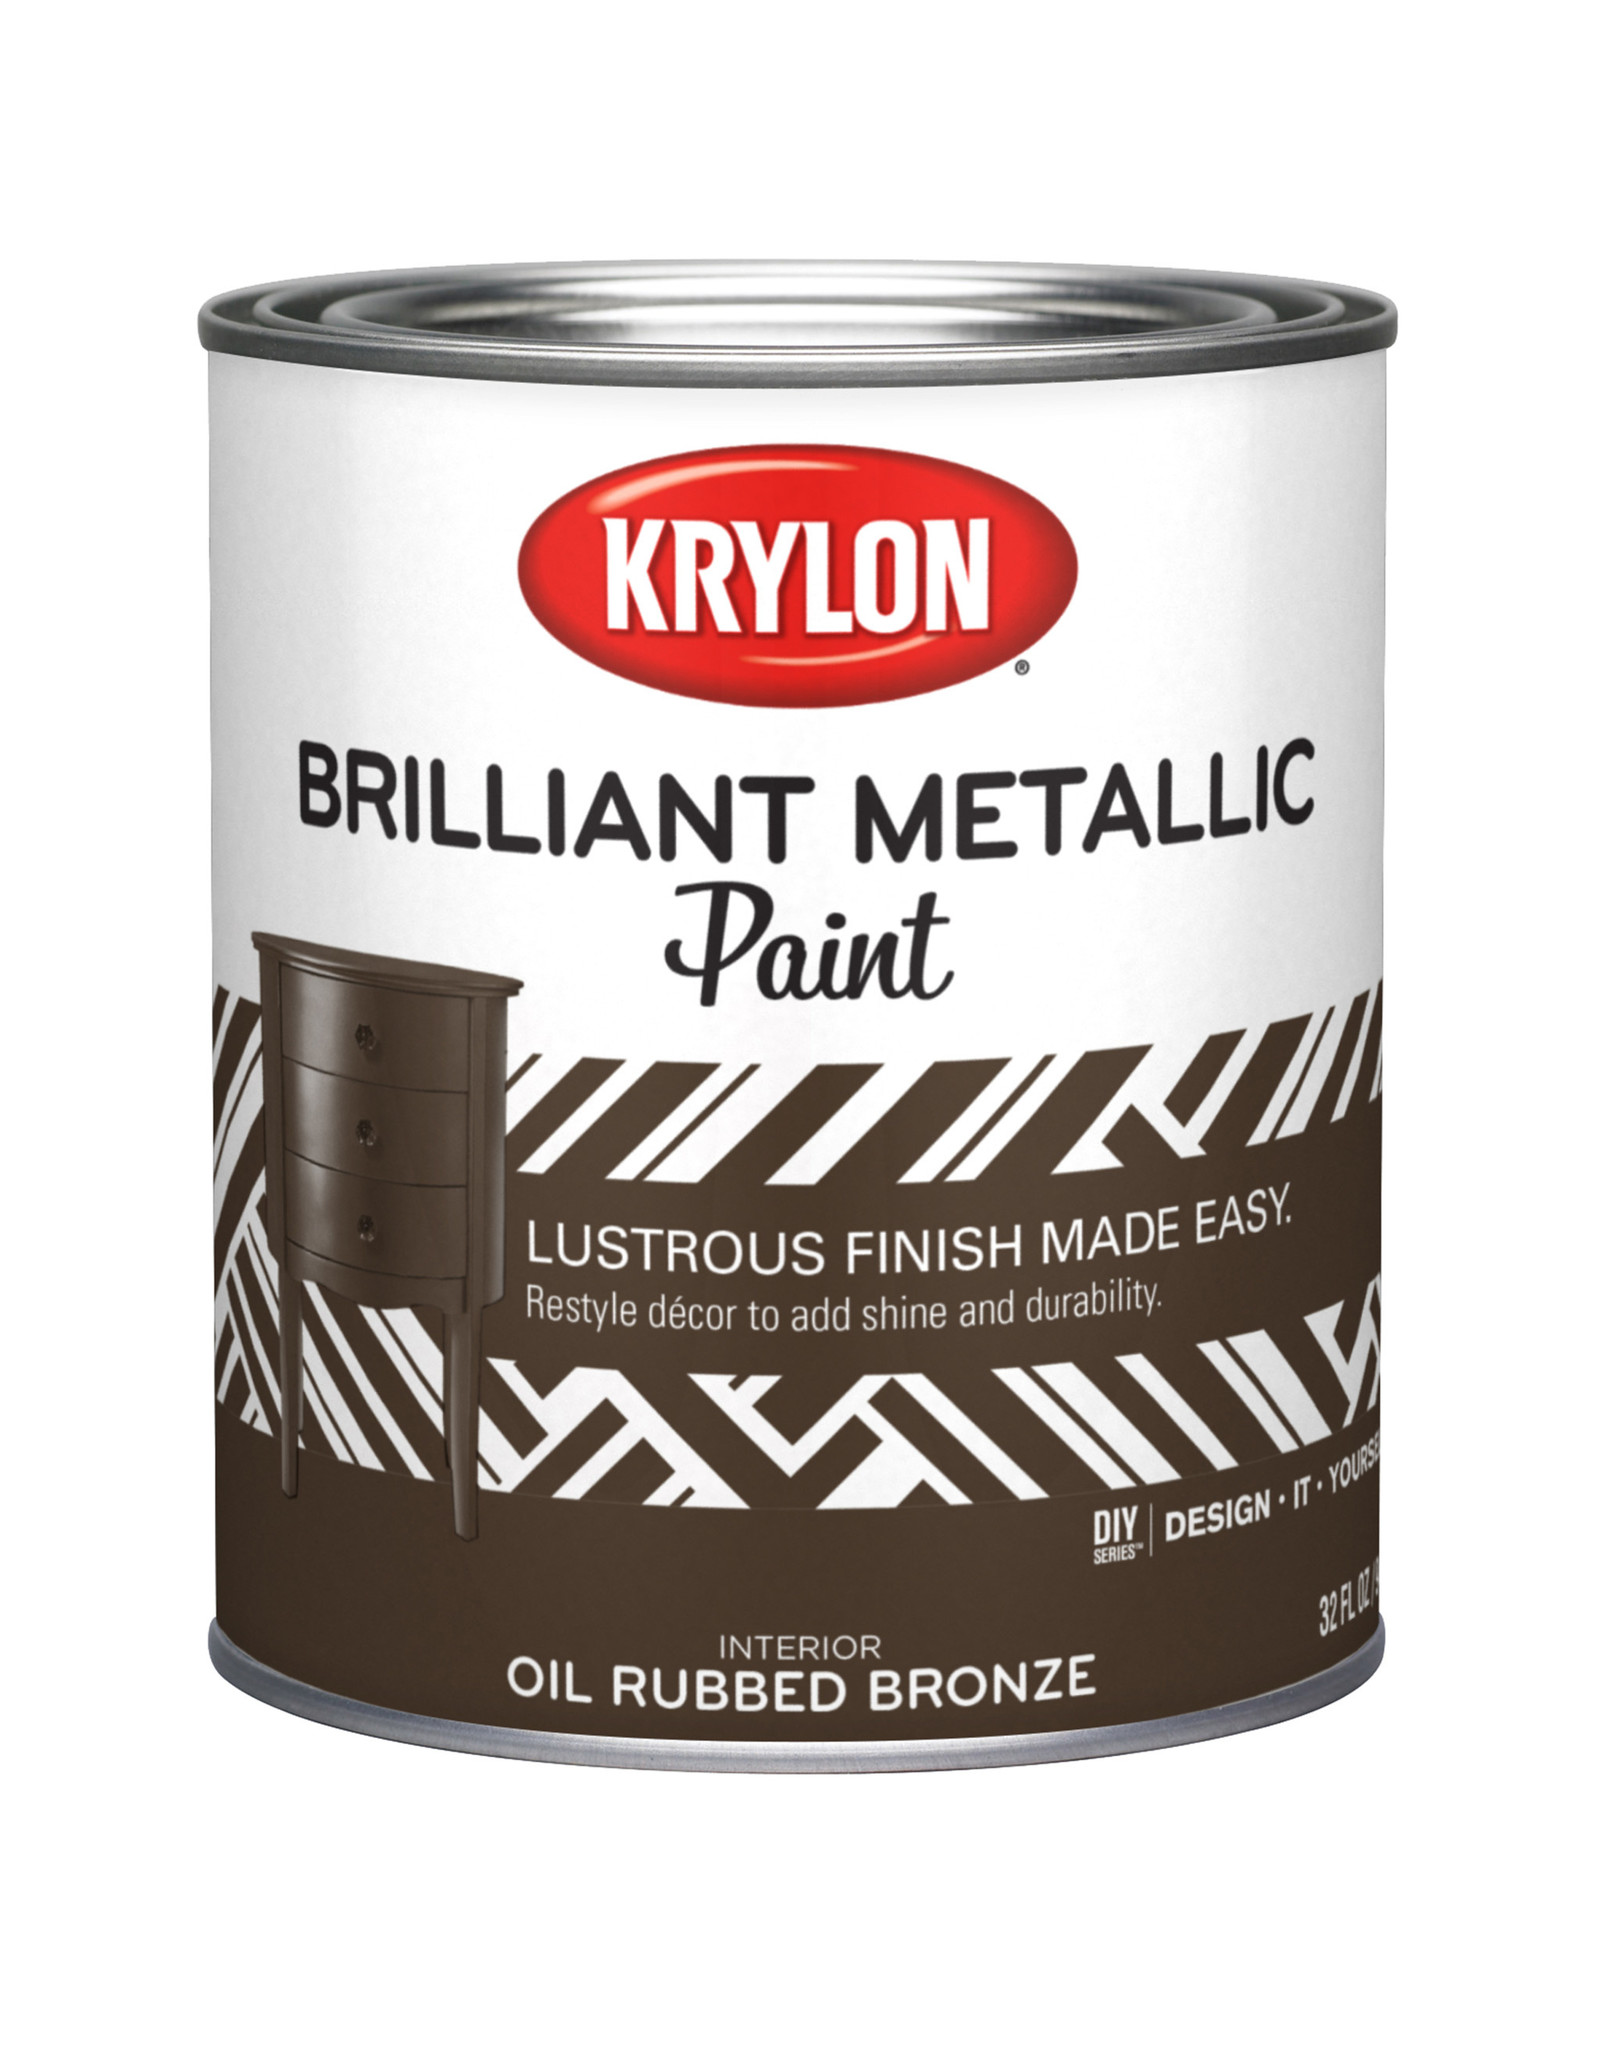 Krylon Silver Brilliant Metallic Quart - The Art Store/Commercial Art Supply